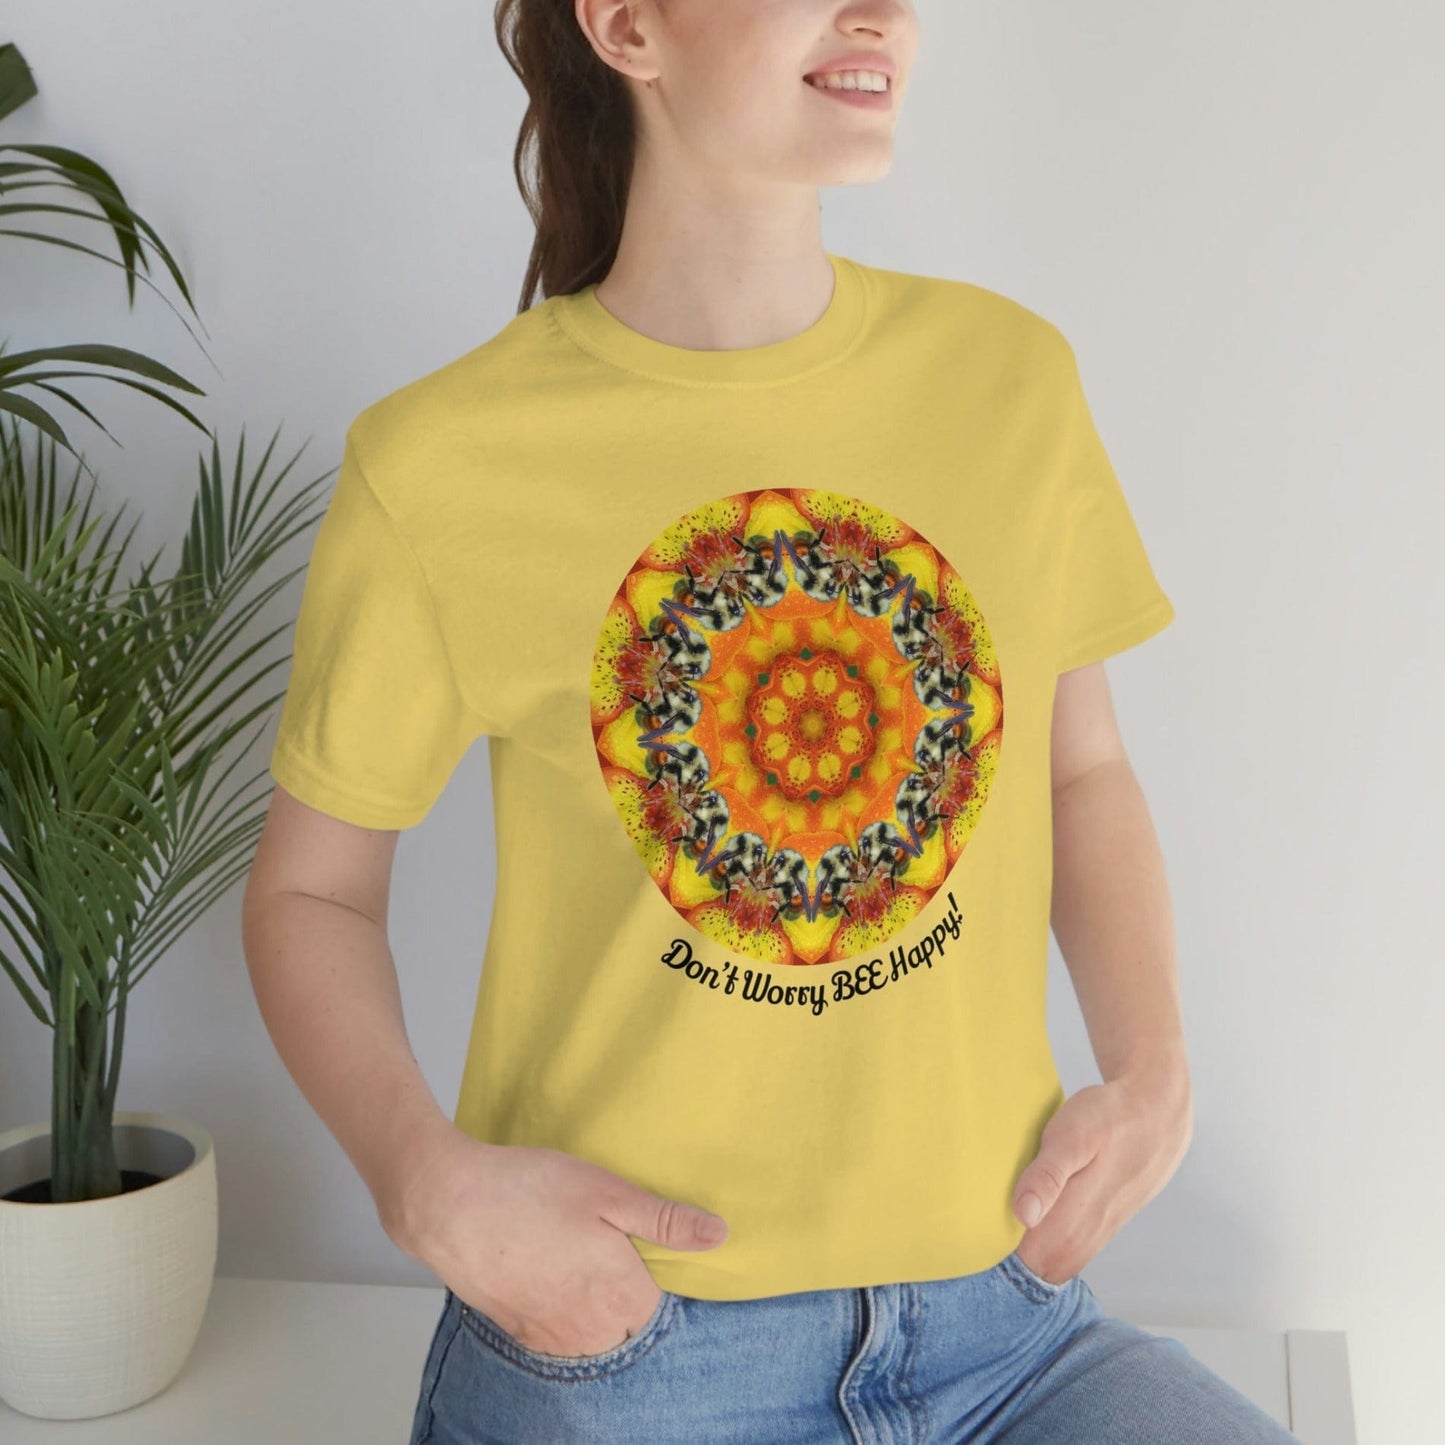 Bee T Shirt, Best Selling Shirts, Poet Shirt, Zen Mystical Cottage Core Insect Shirt, Witty Bug Shirt, Cute Shirts Teens, Mandala T Shirt B